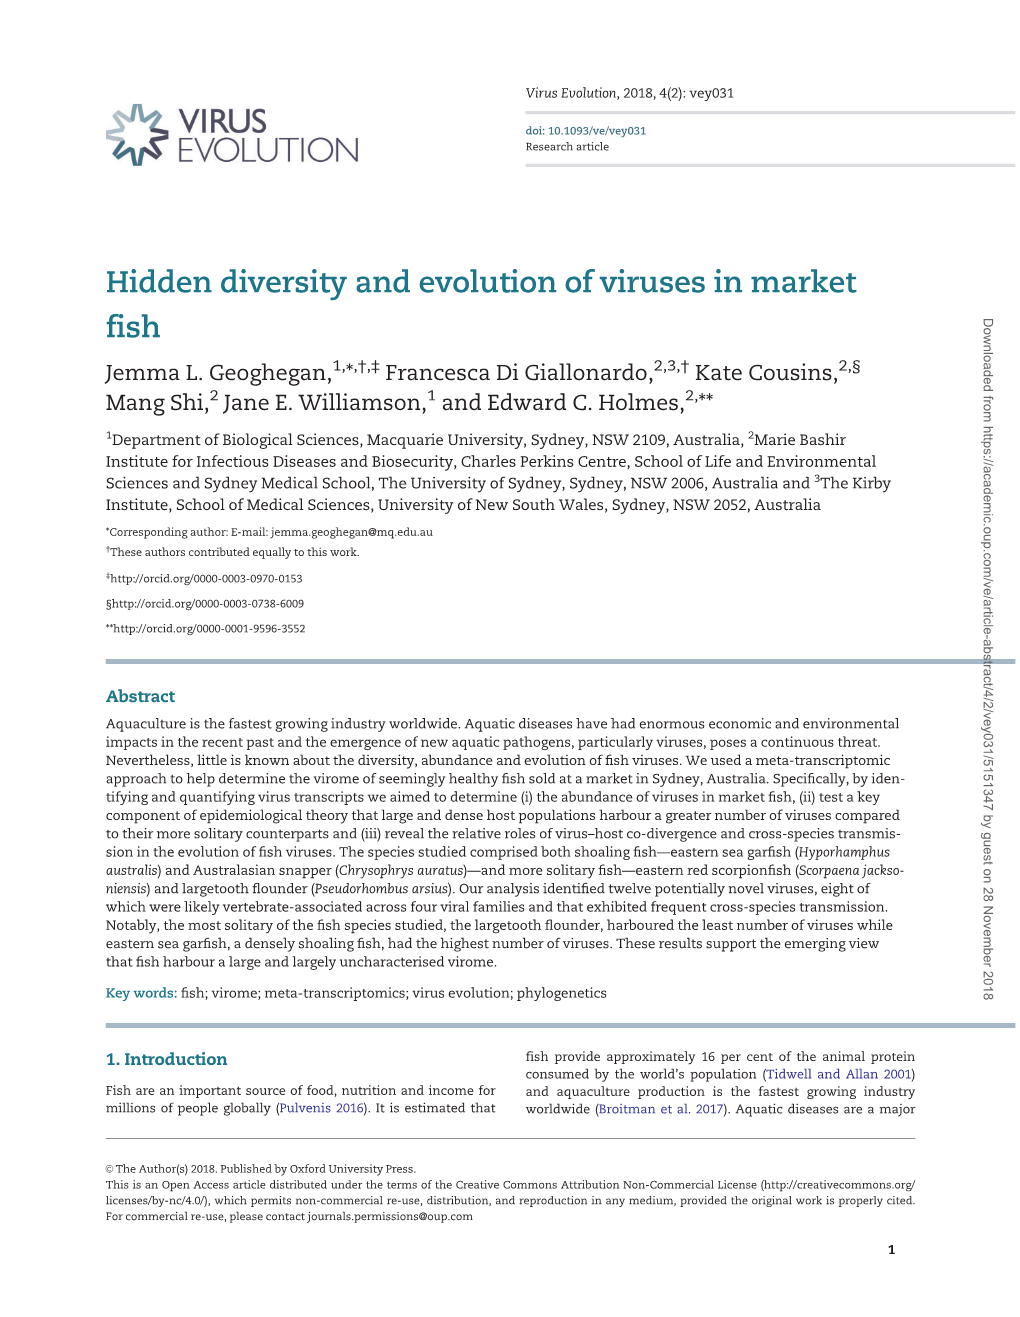 Hidden Diversity and Evolution of Viruses In